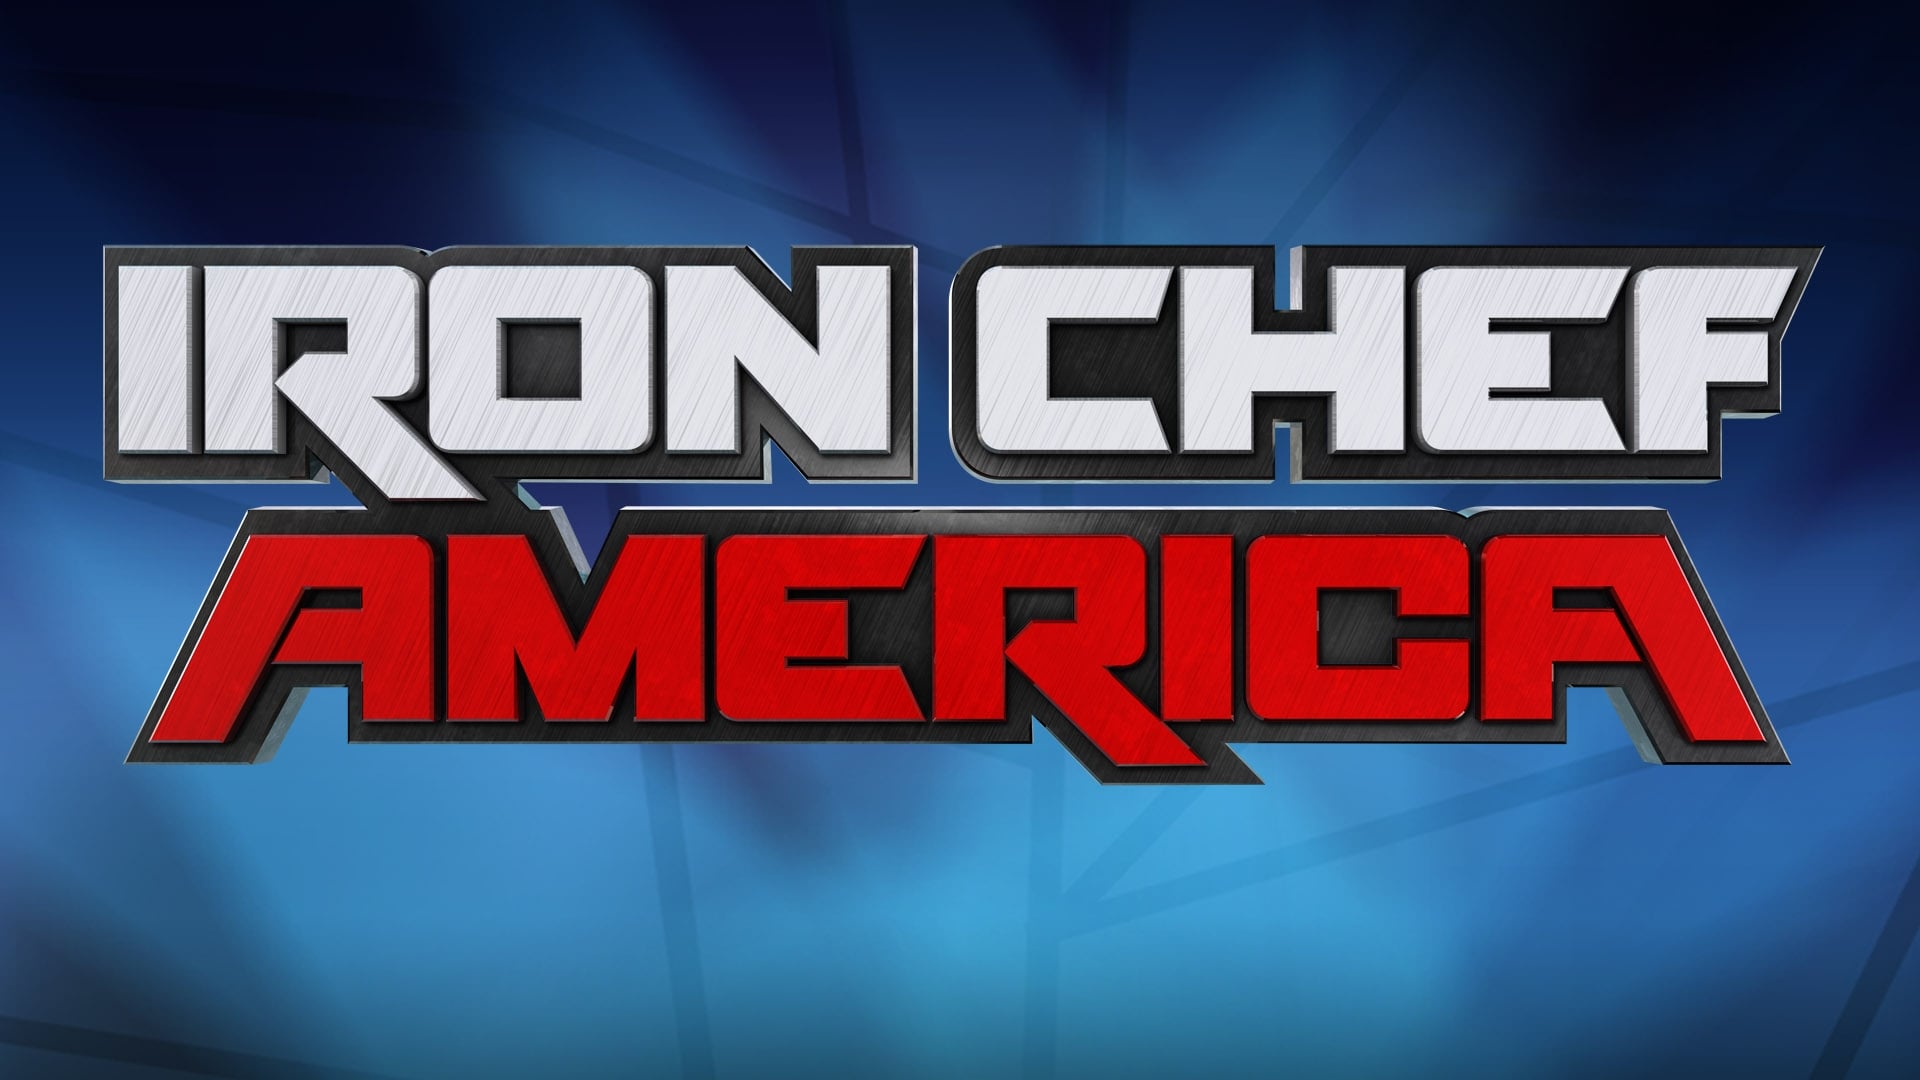 Iron Chef America: The Series season 13